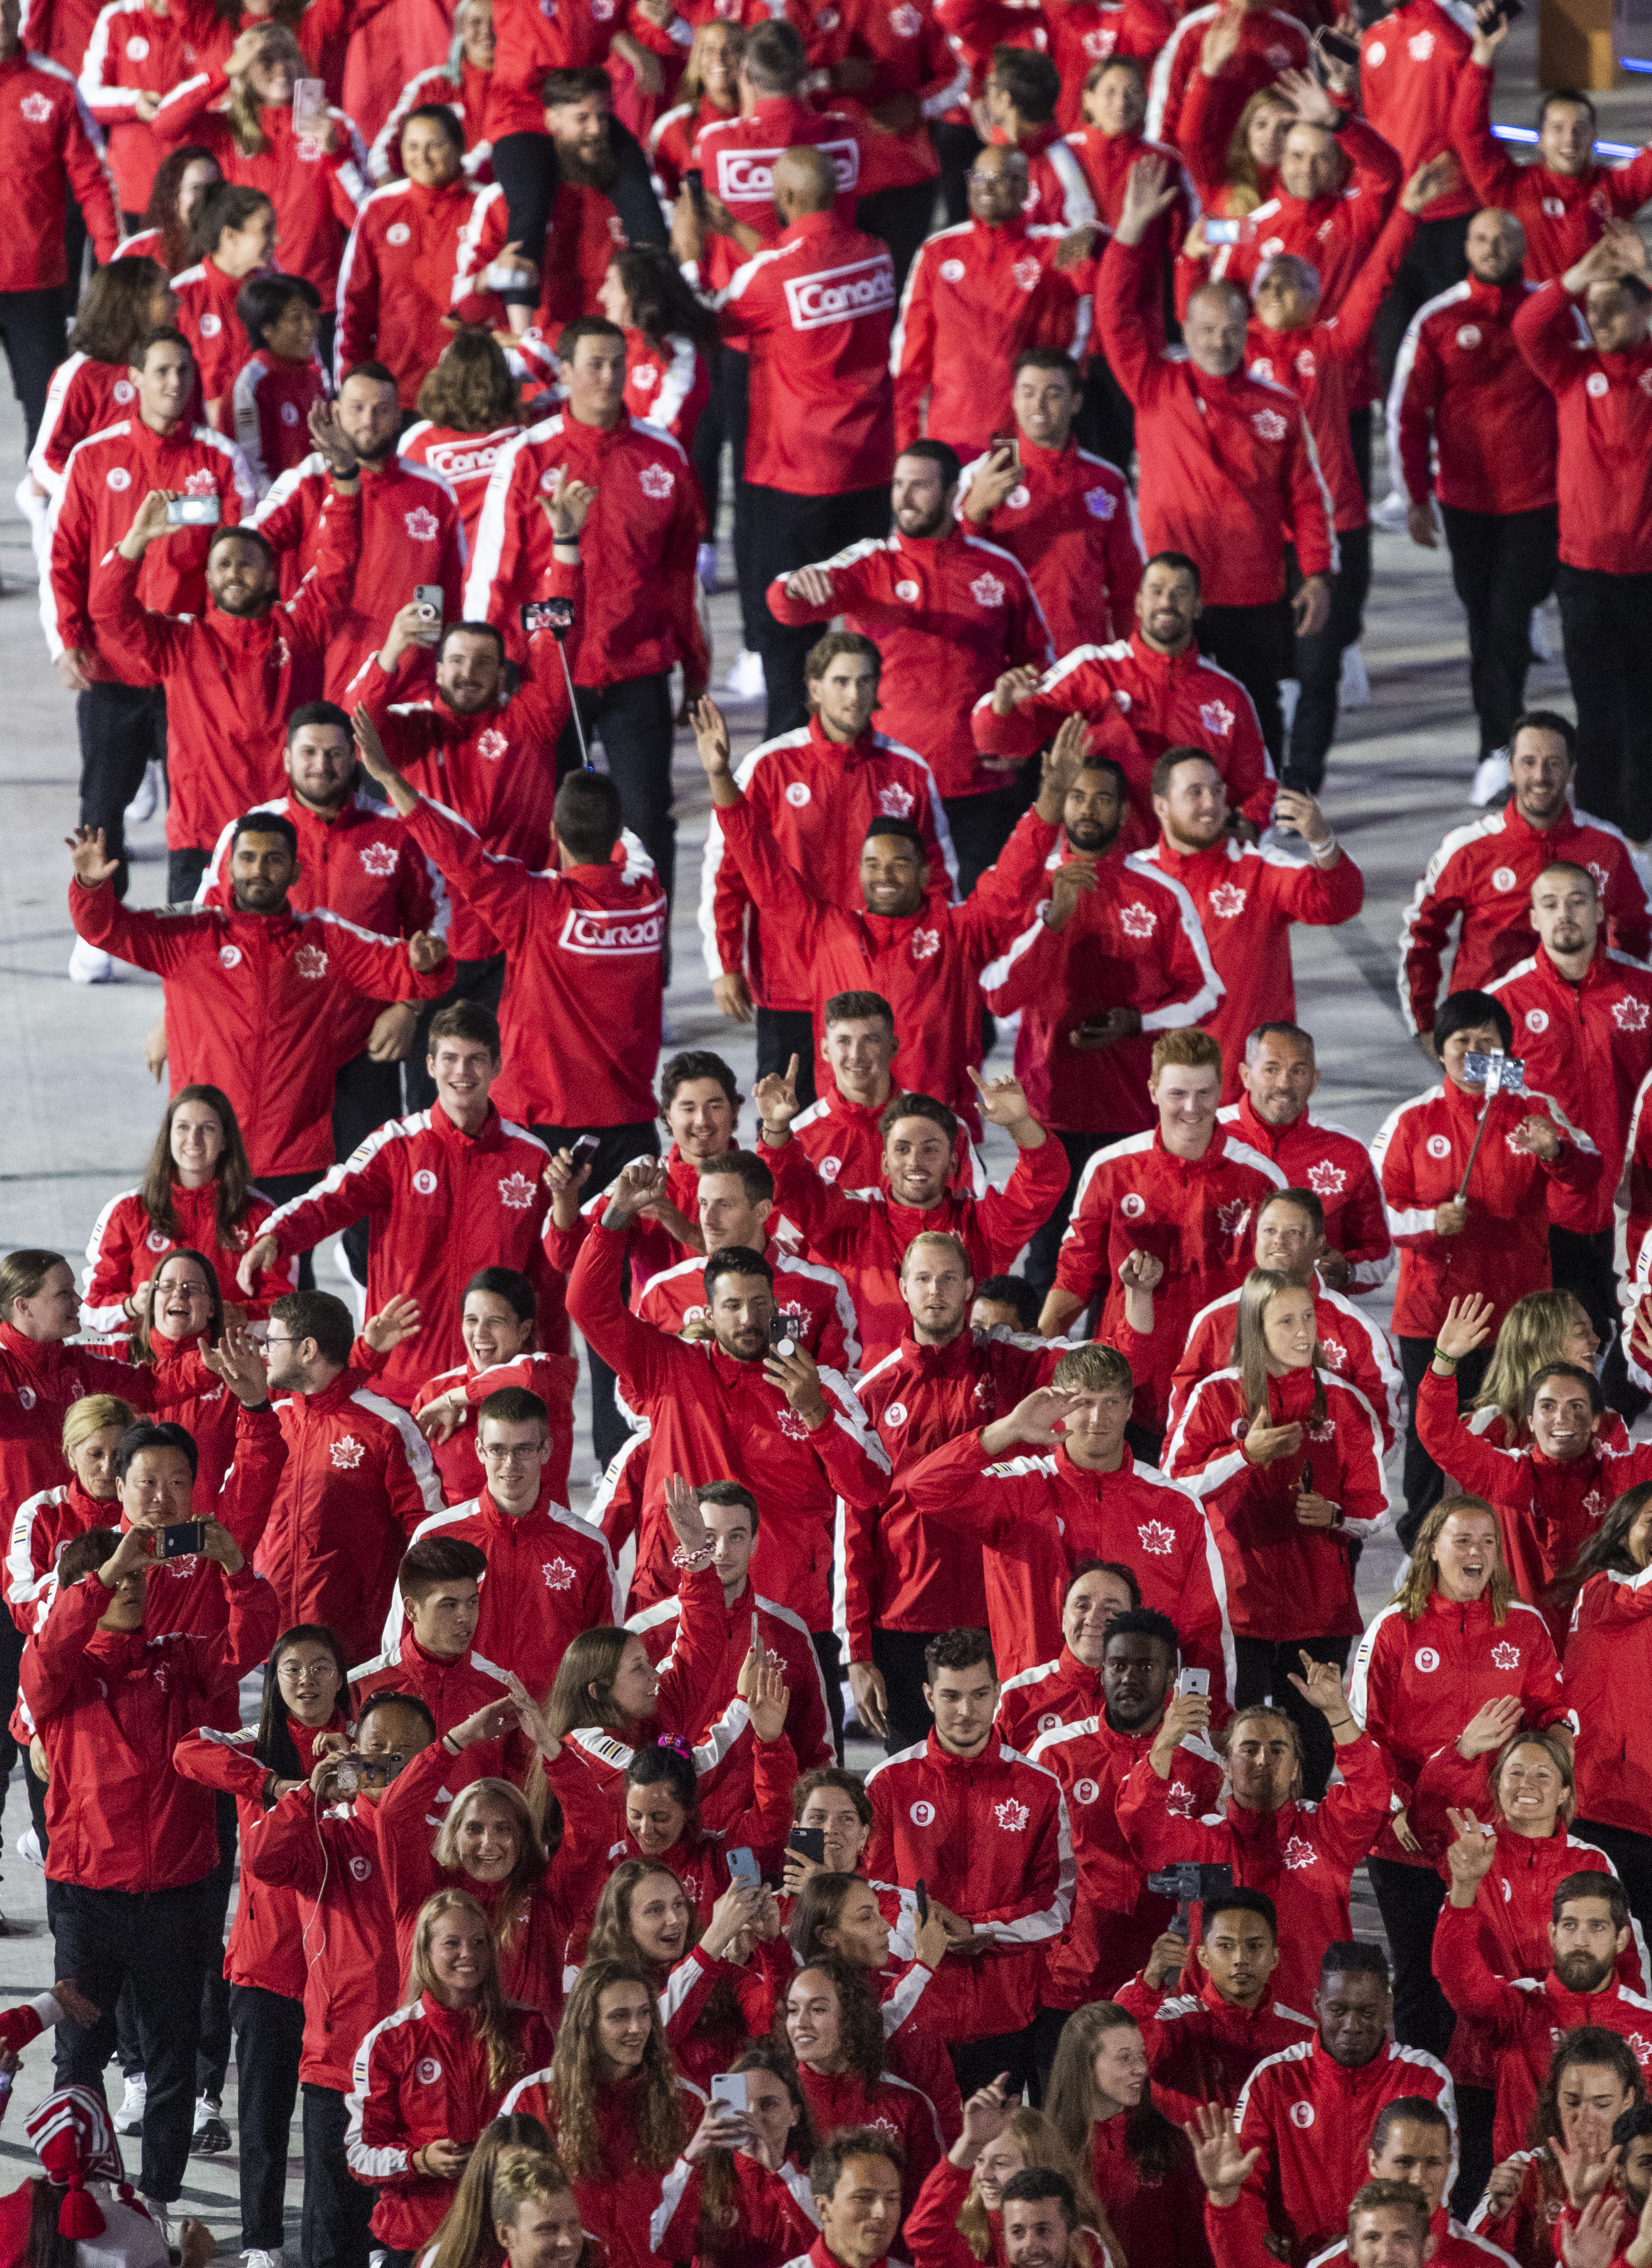 Members of Team Canada enter the Estadio Nacional